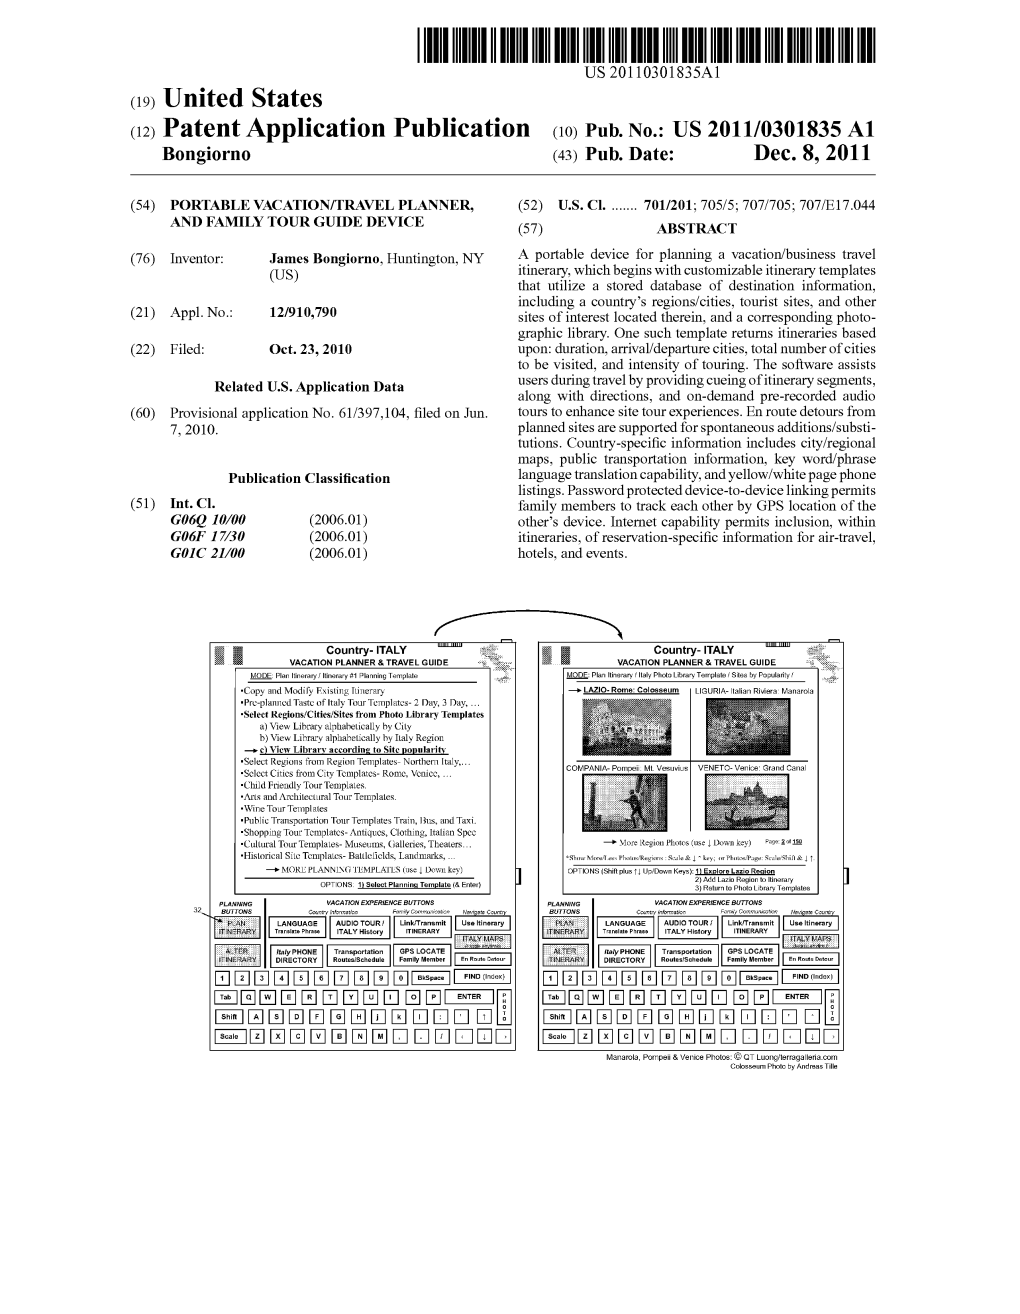 (12) Patent Application Publication (10) Pub. No.: US 2011/0301835 A1 Bongiorno (43) Pub